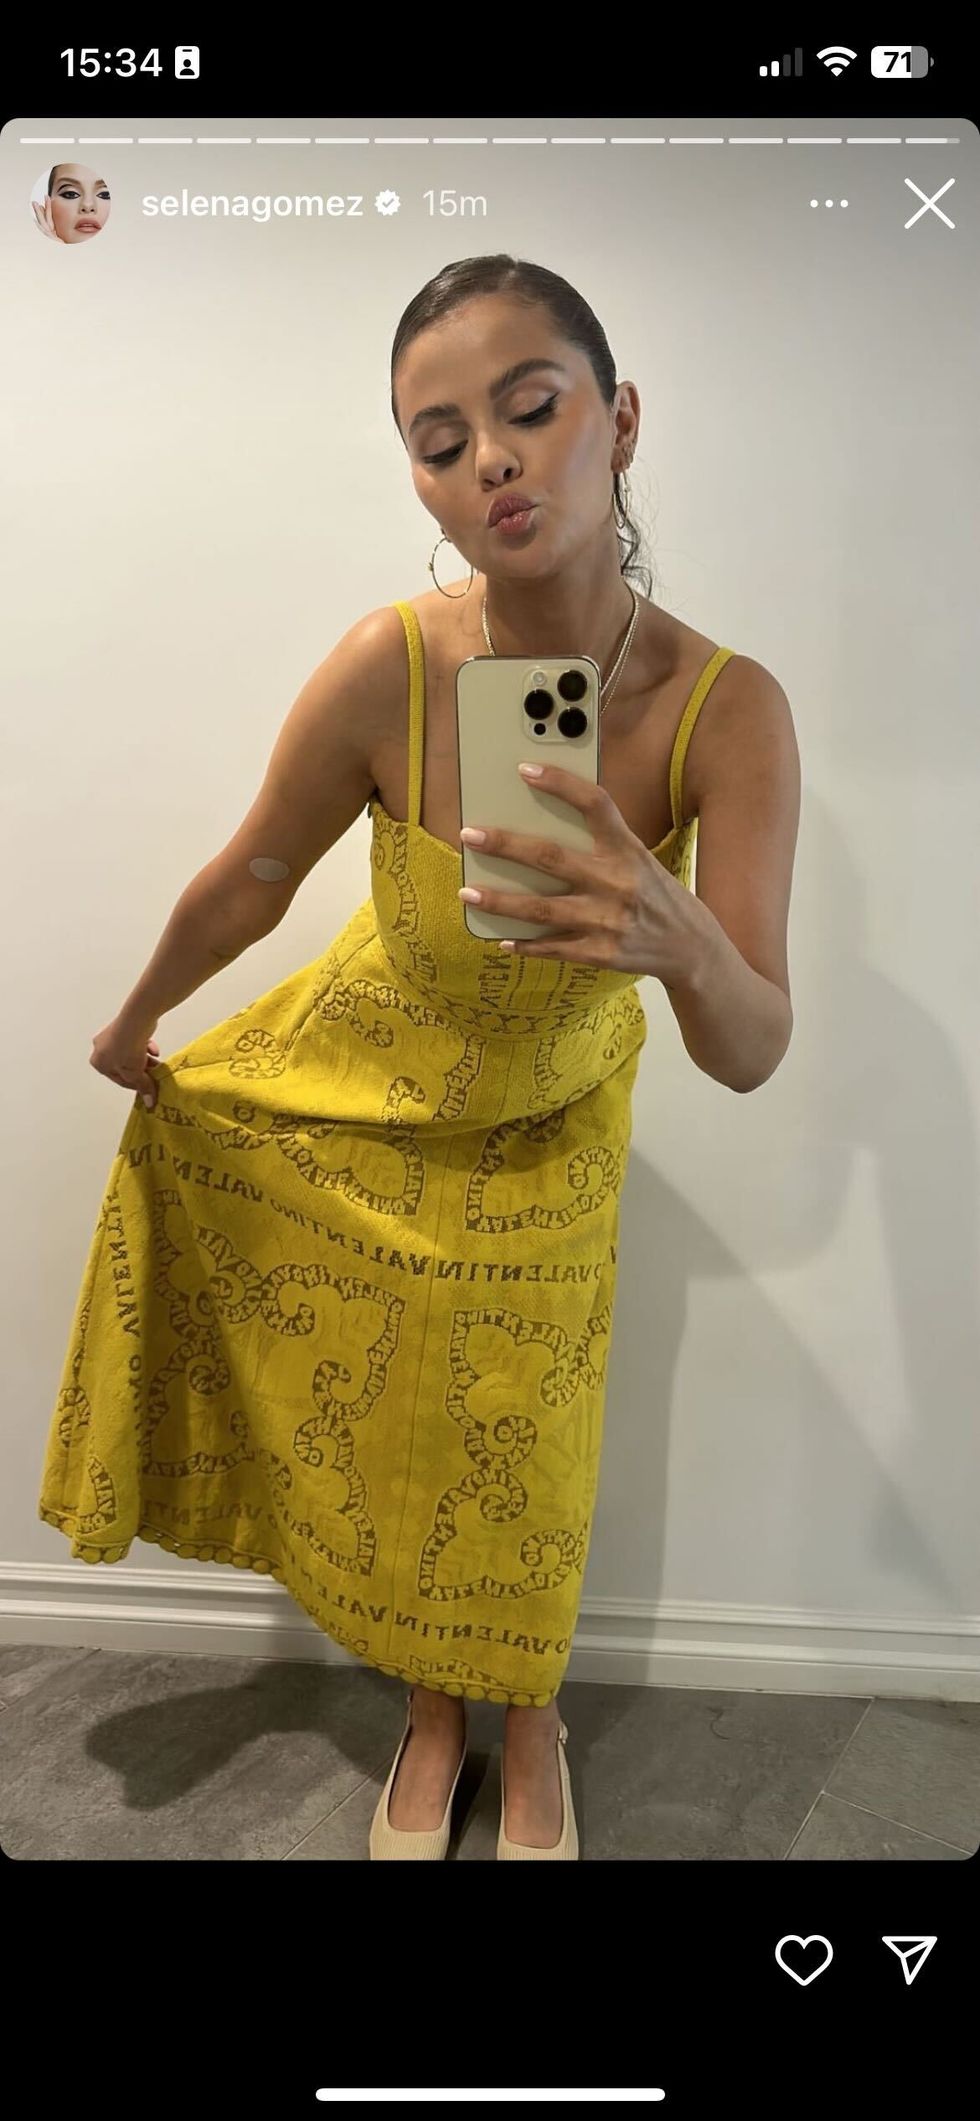 selena gomez in her yellow dress